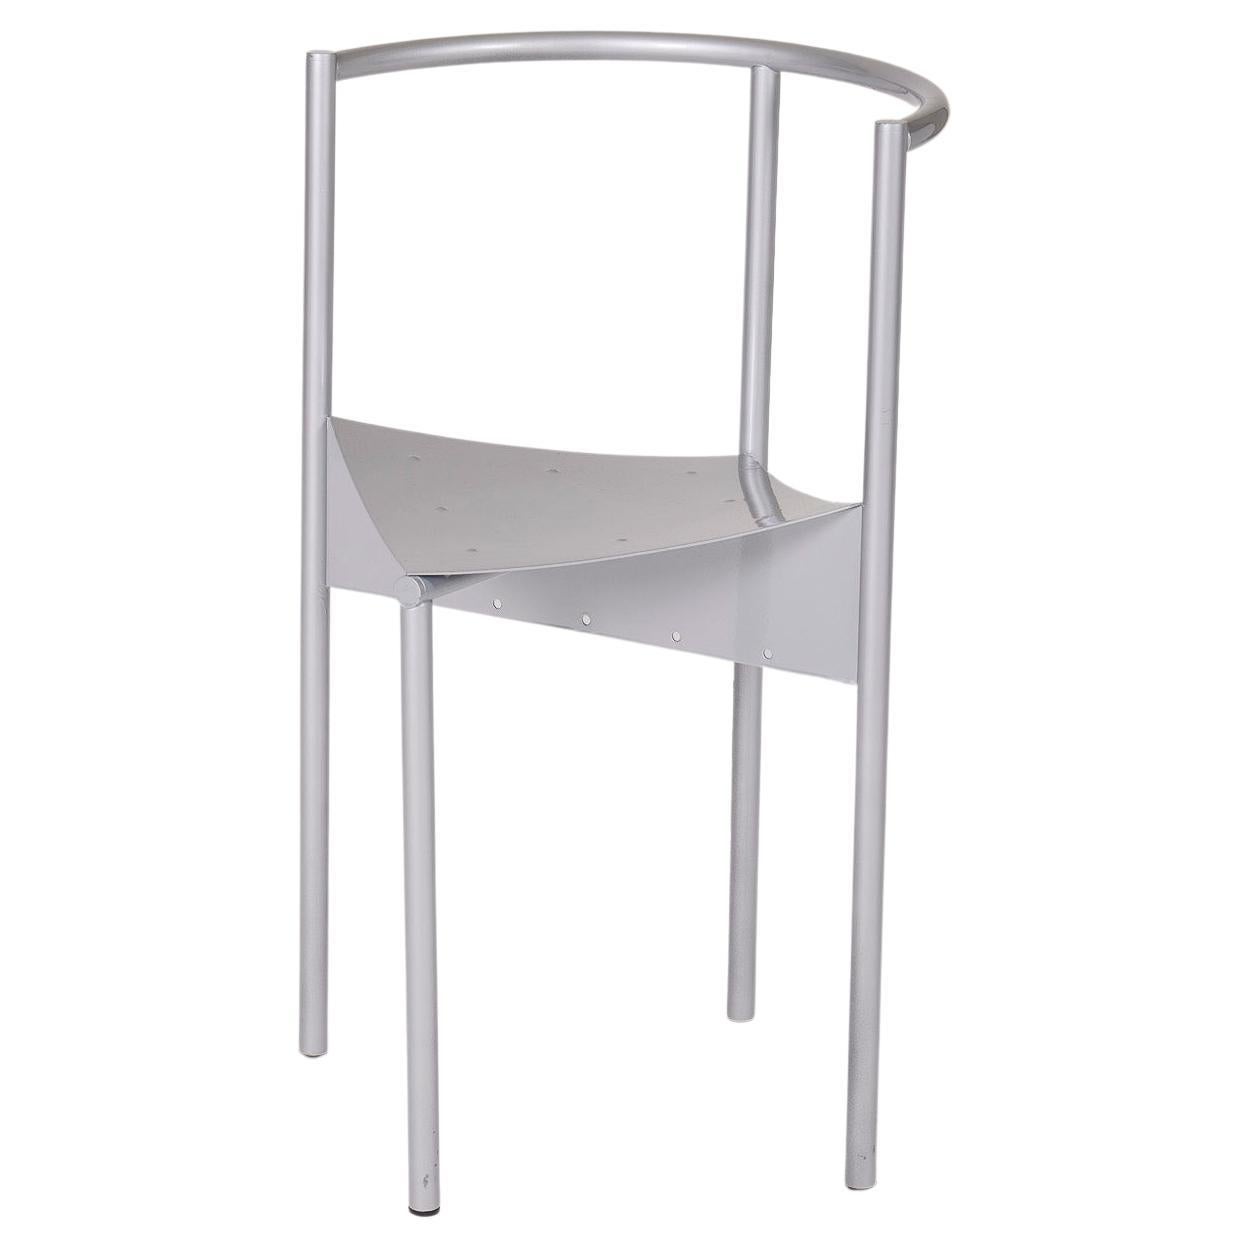 Philippe Starck chair